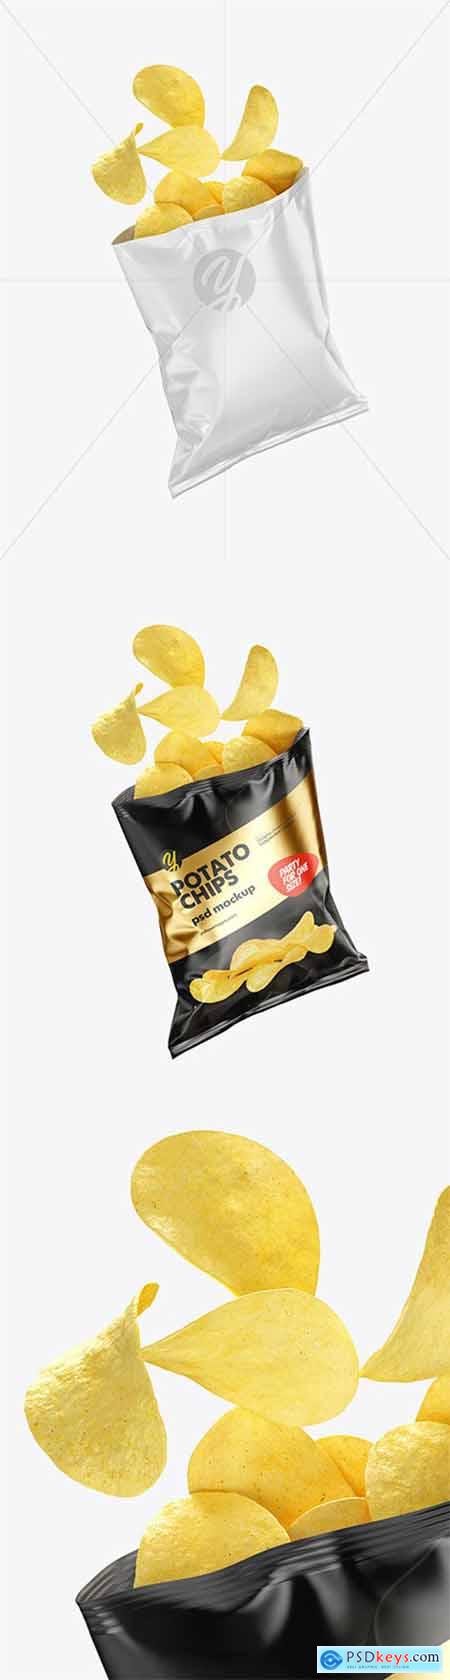 Glossy Bag w- Chips Mockup 51784